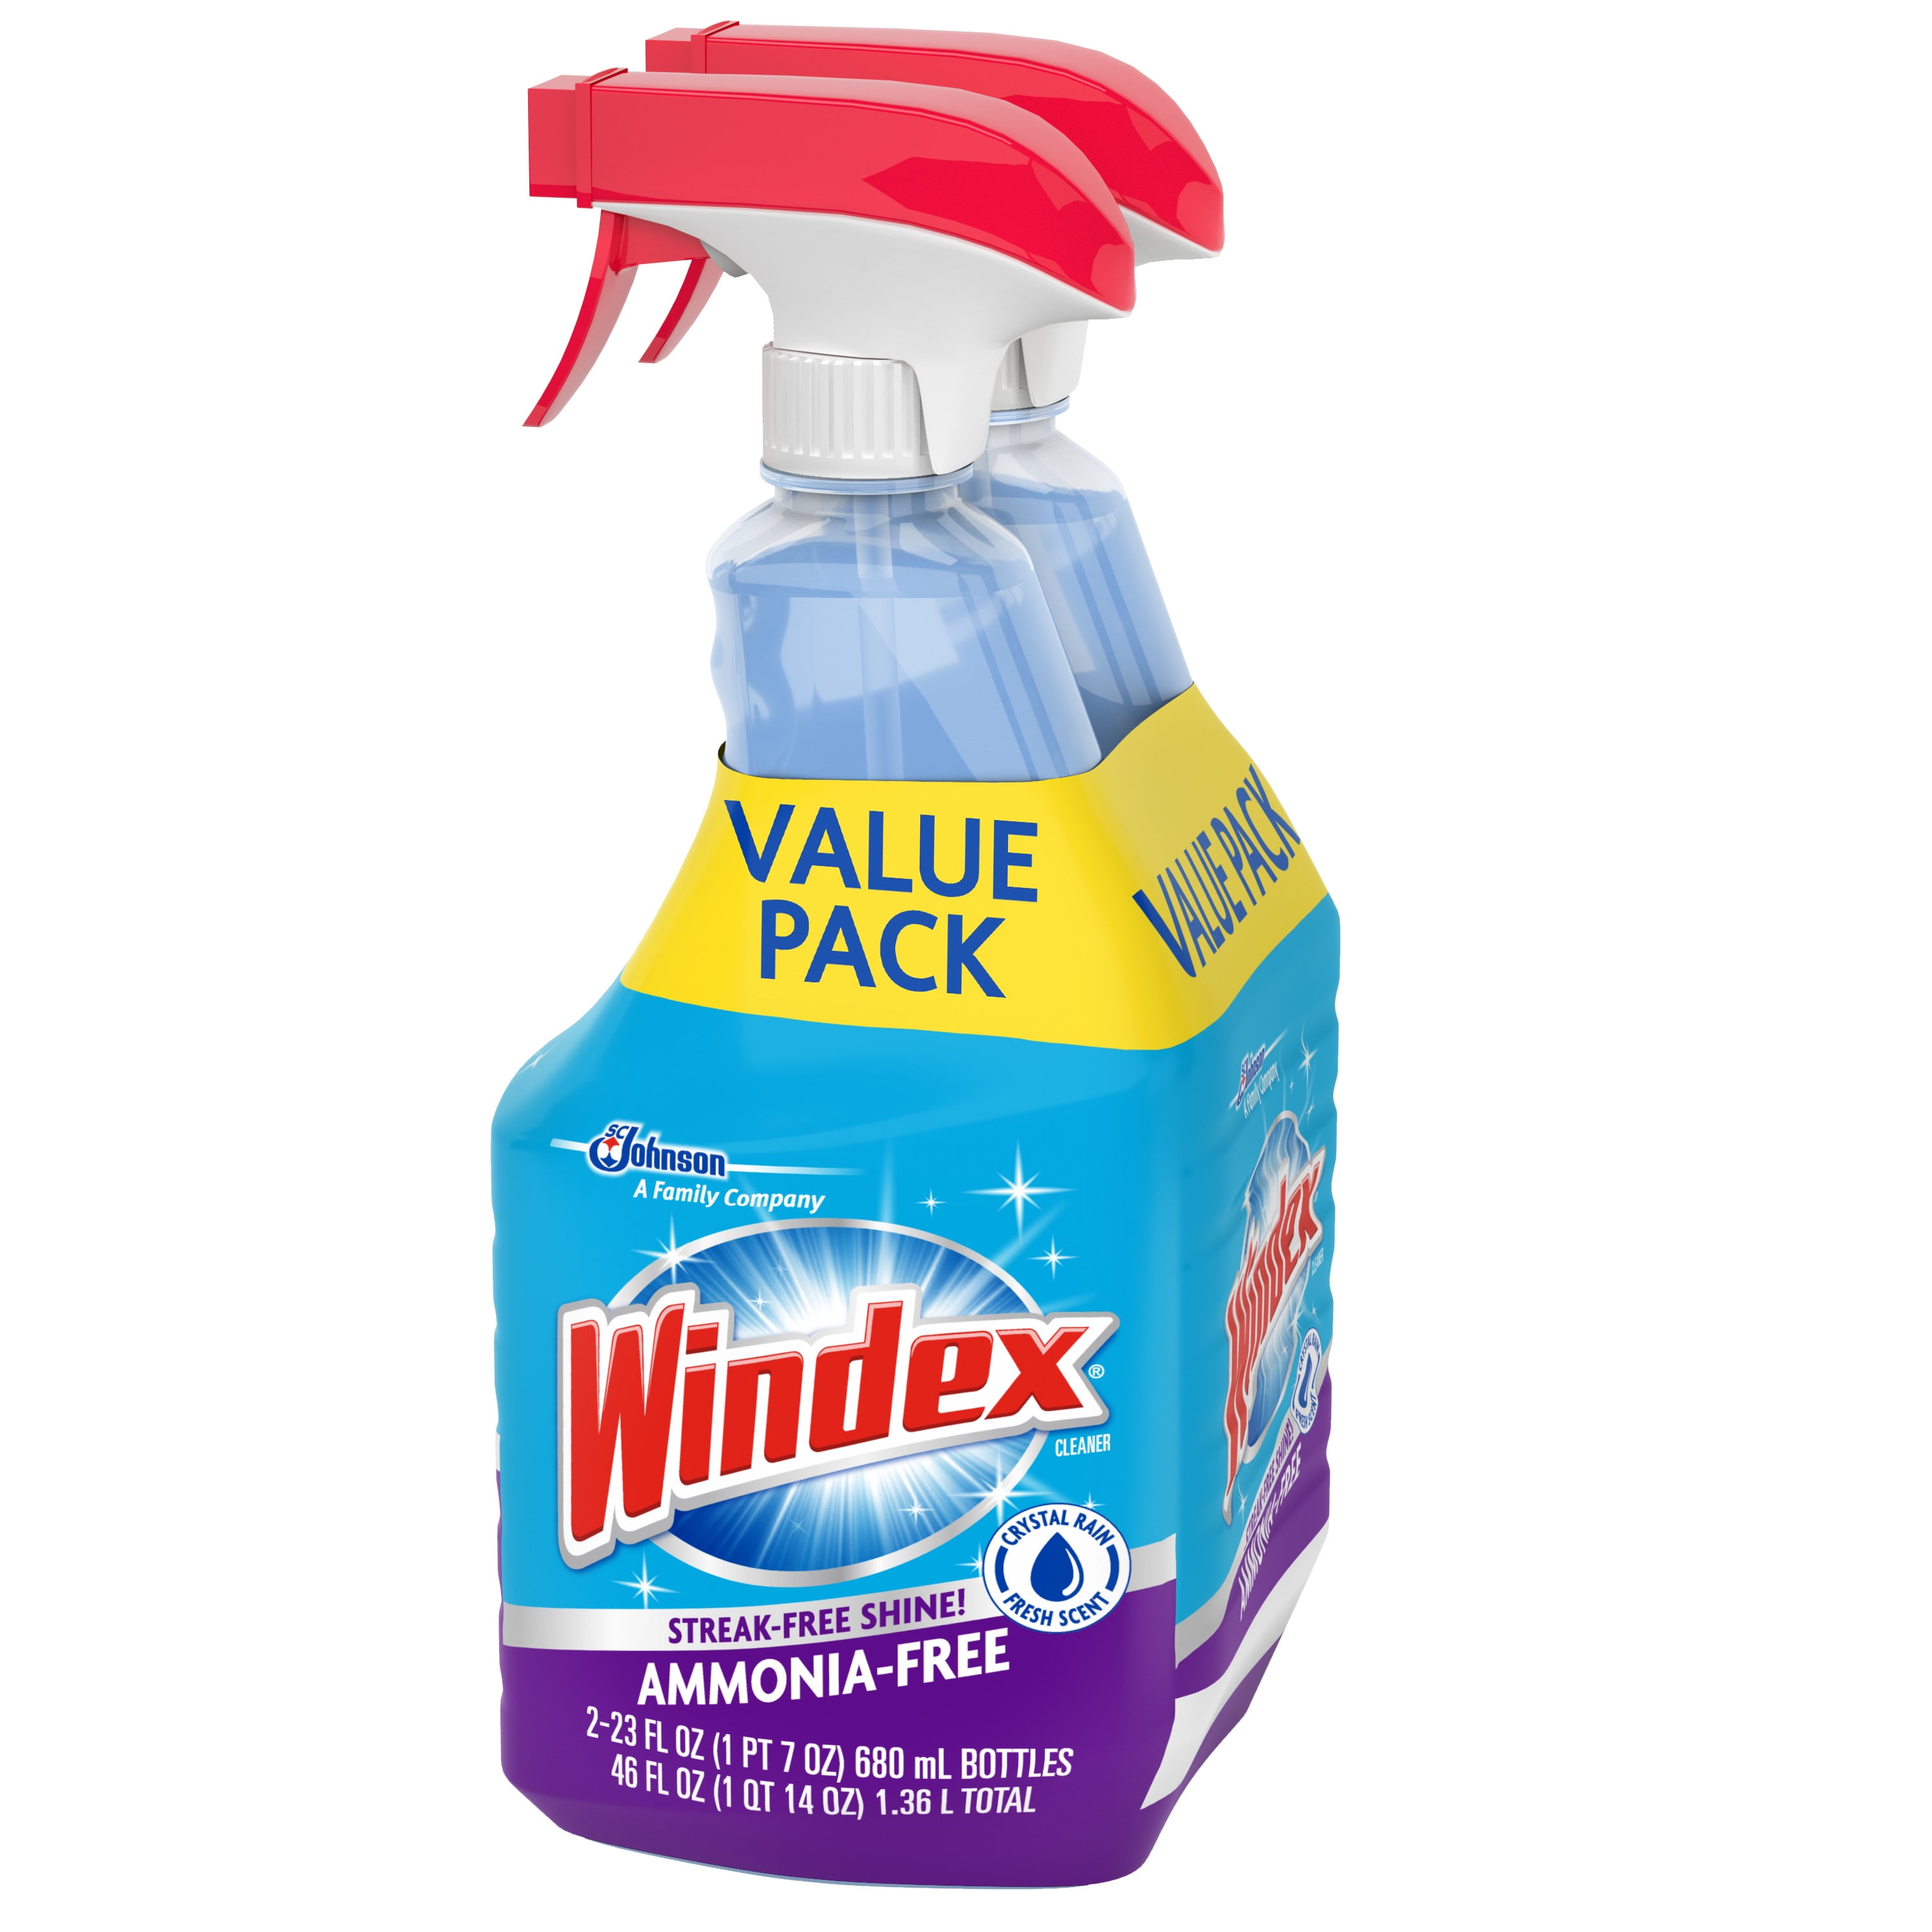 Windex 23 fl. oz. Crystal Rain Glass Cleaner 679593 - The Home Depot